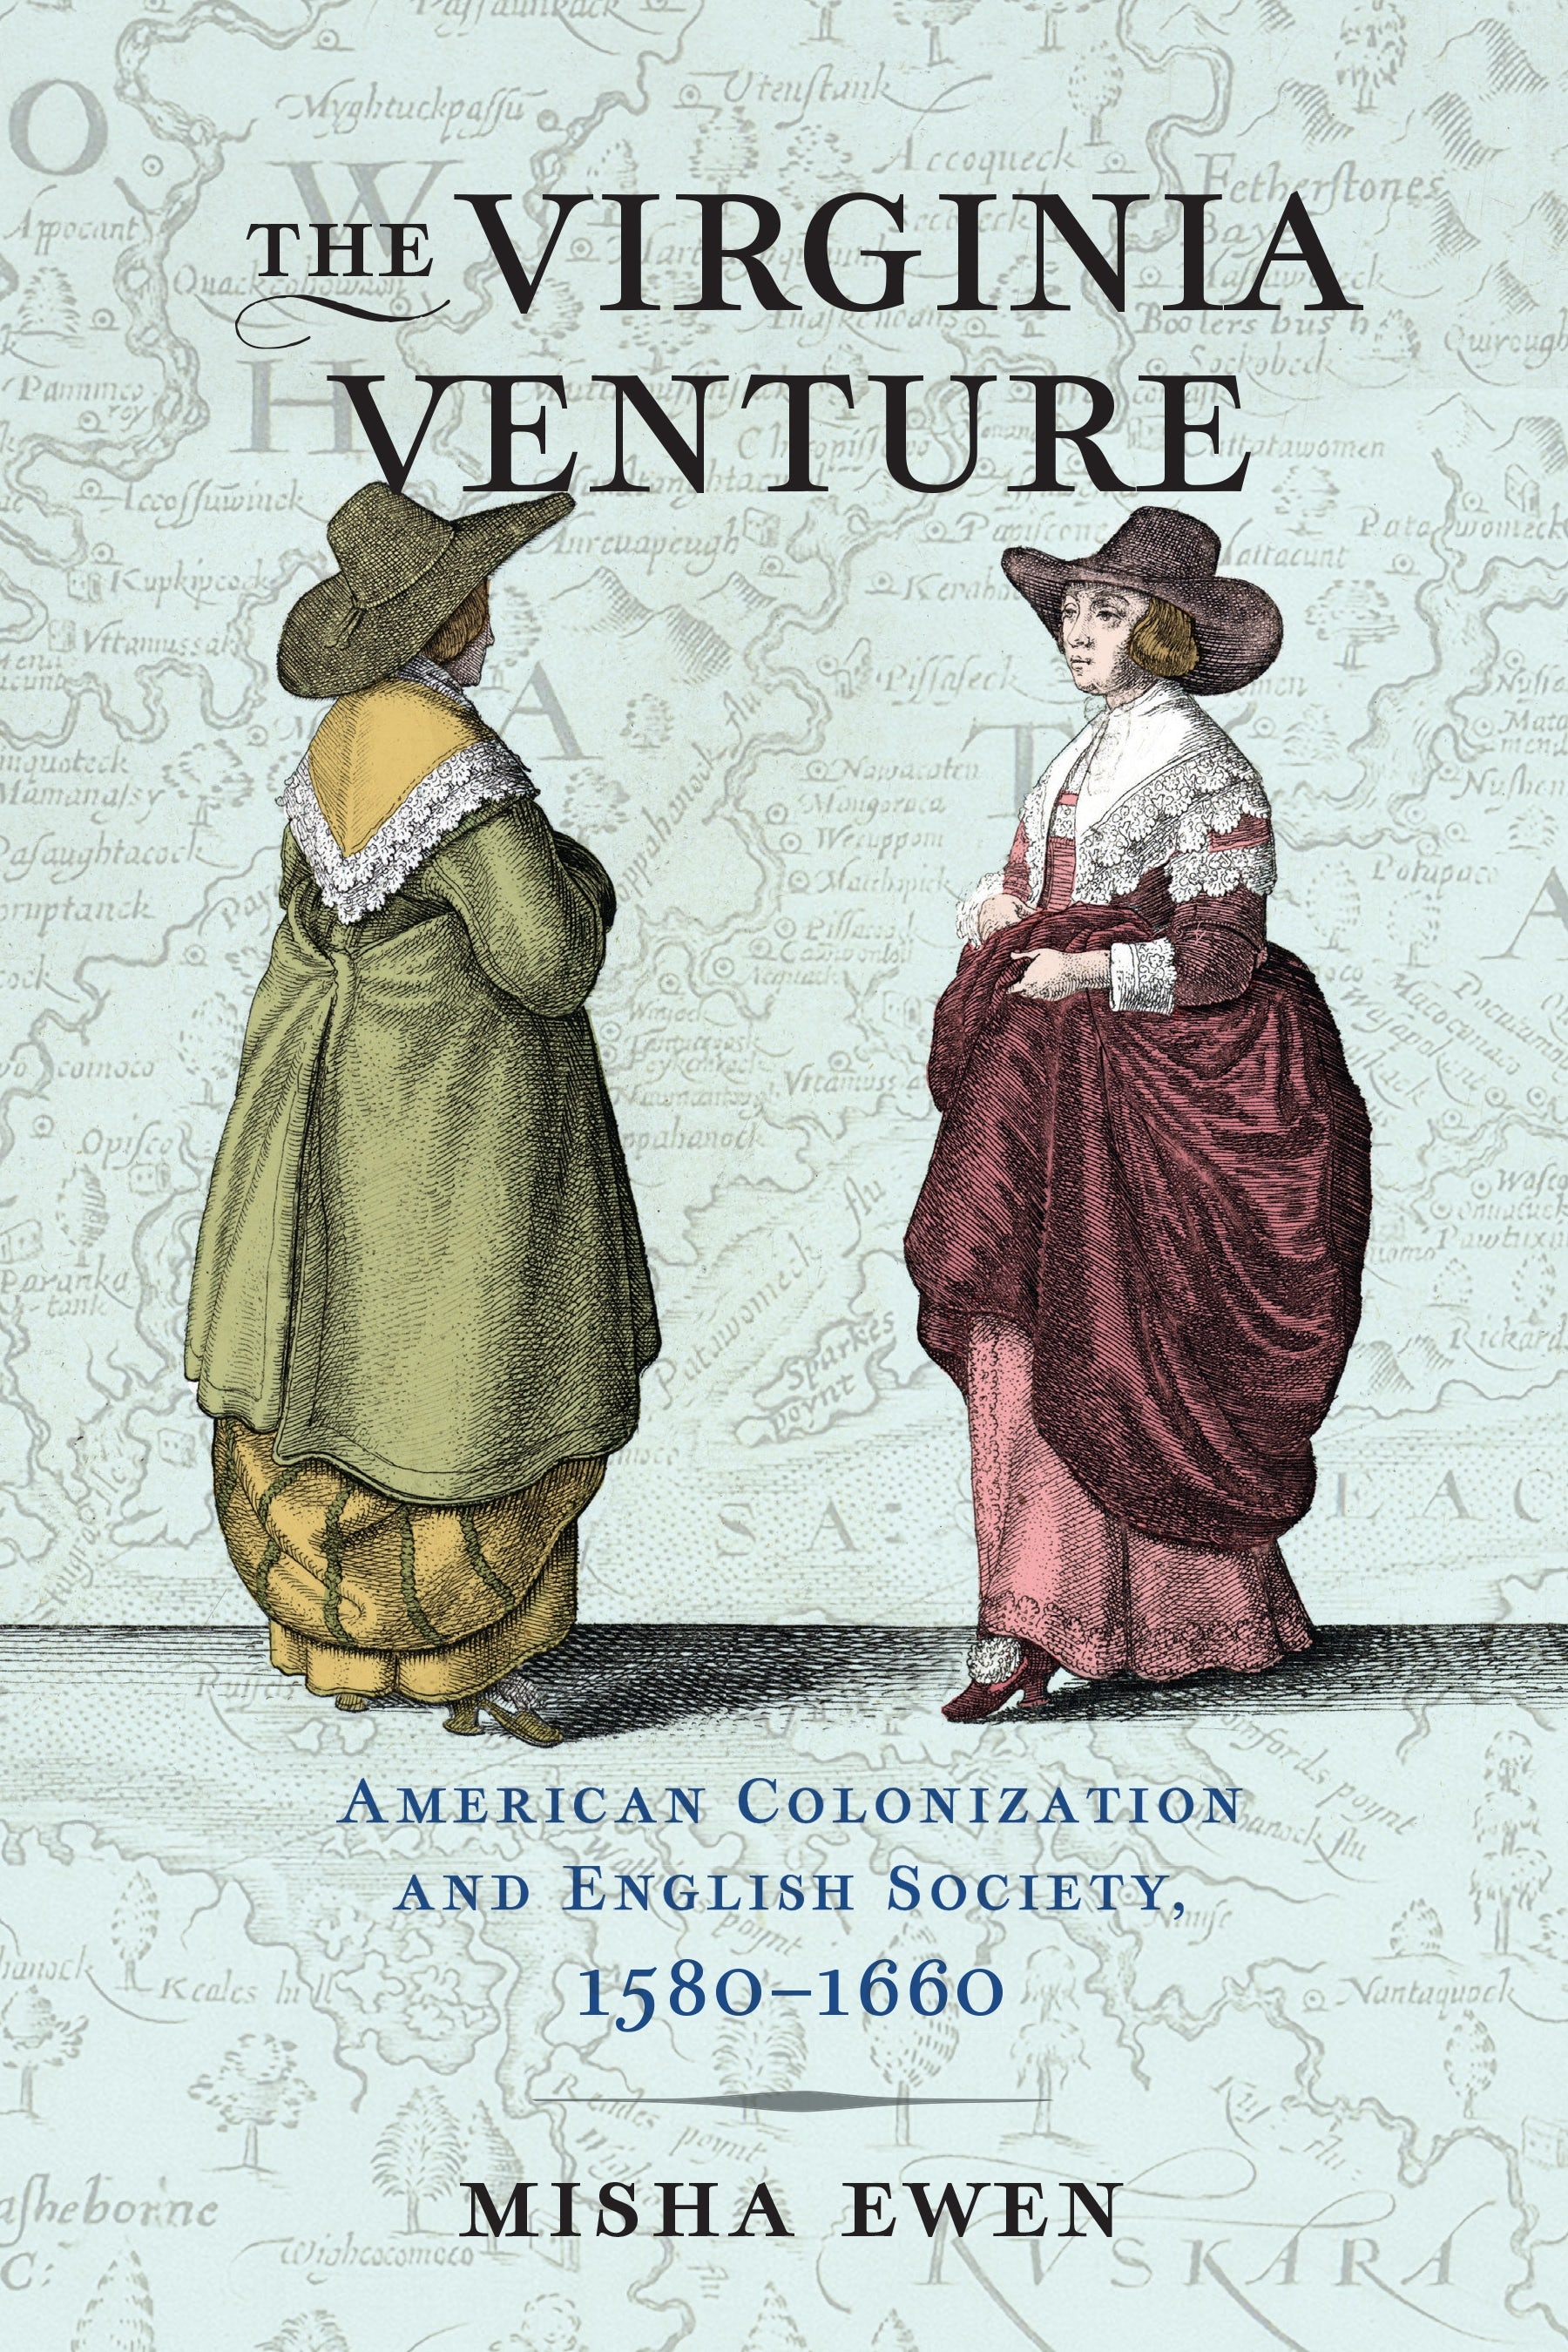 Book Cover for Ewen's Virginia Venture